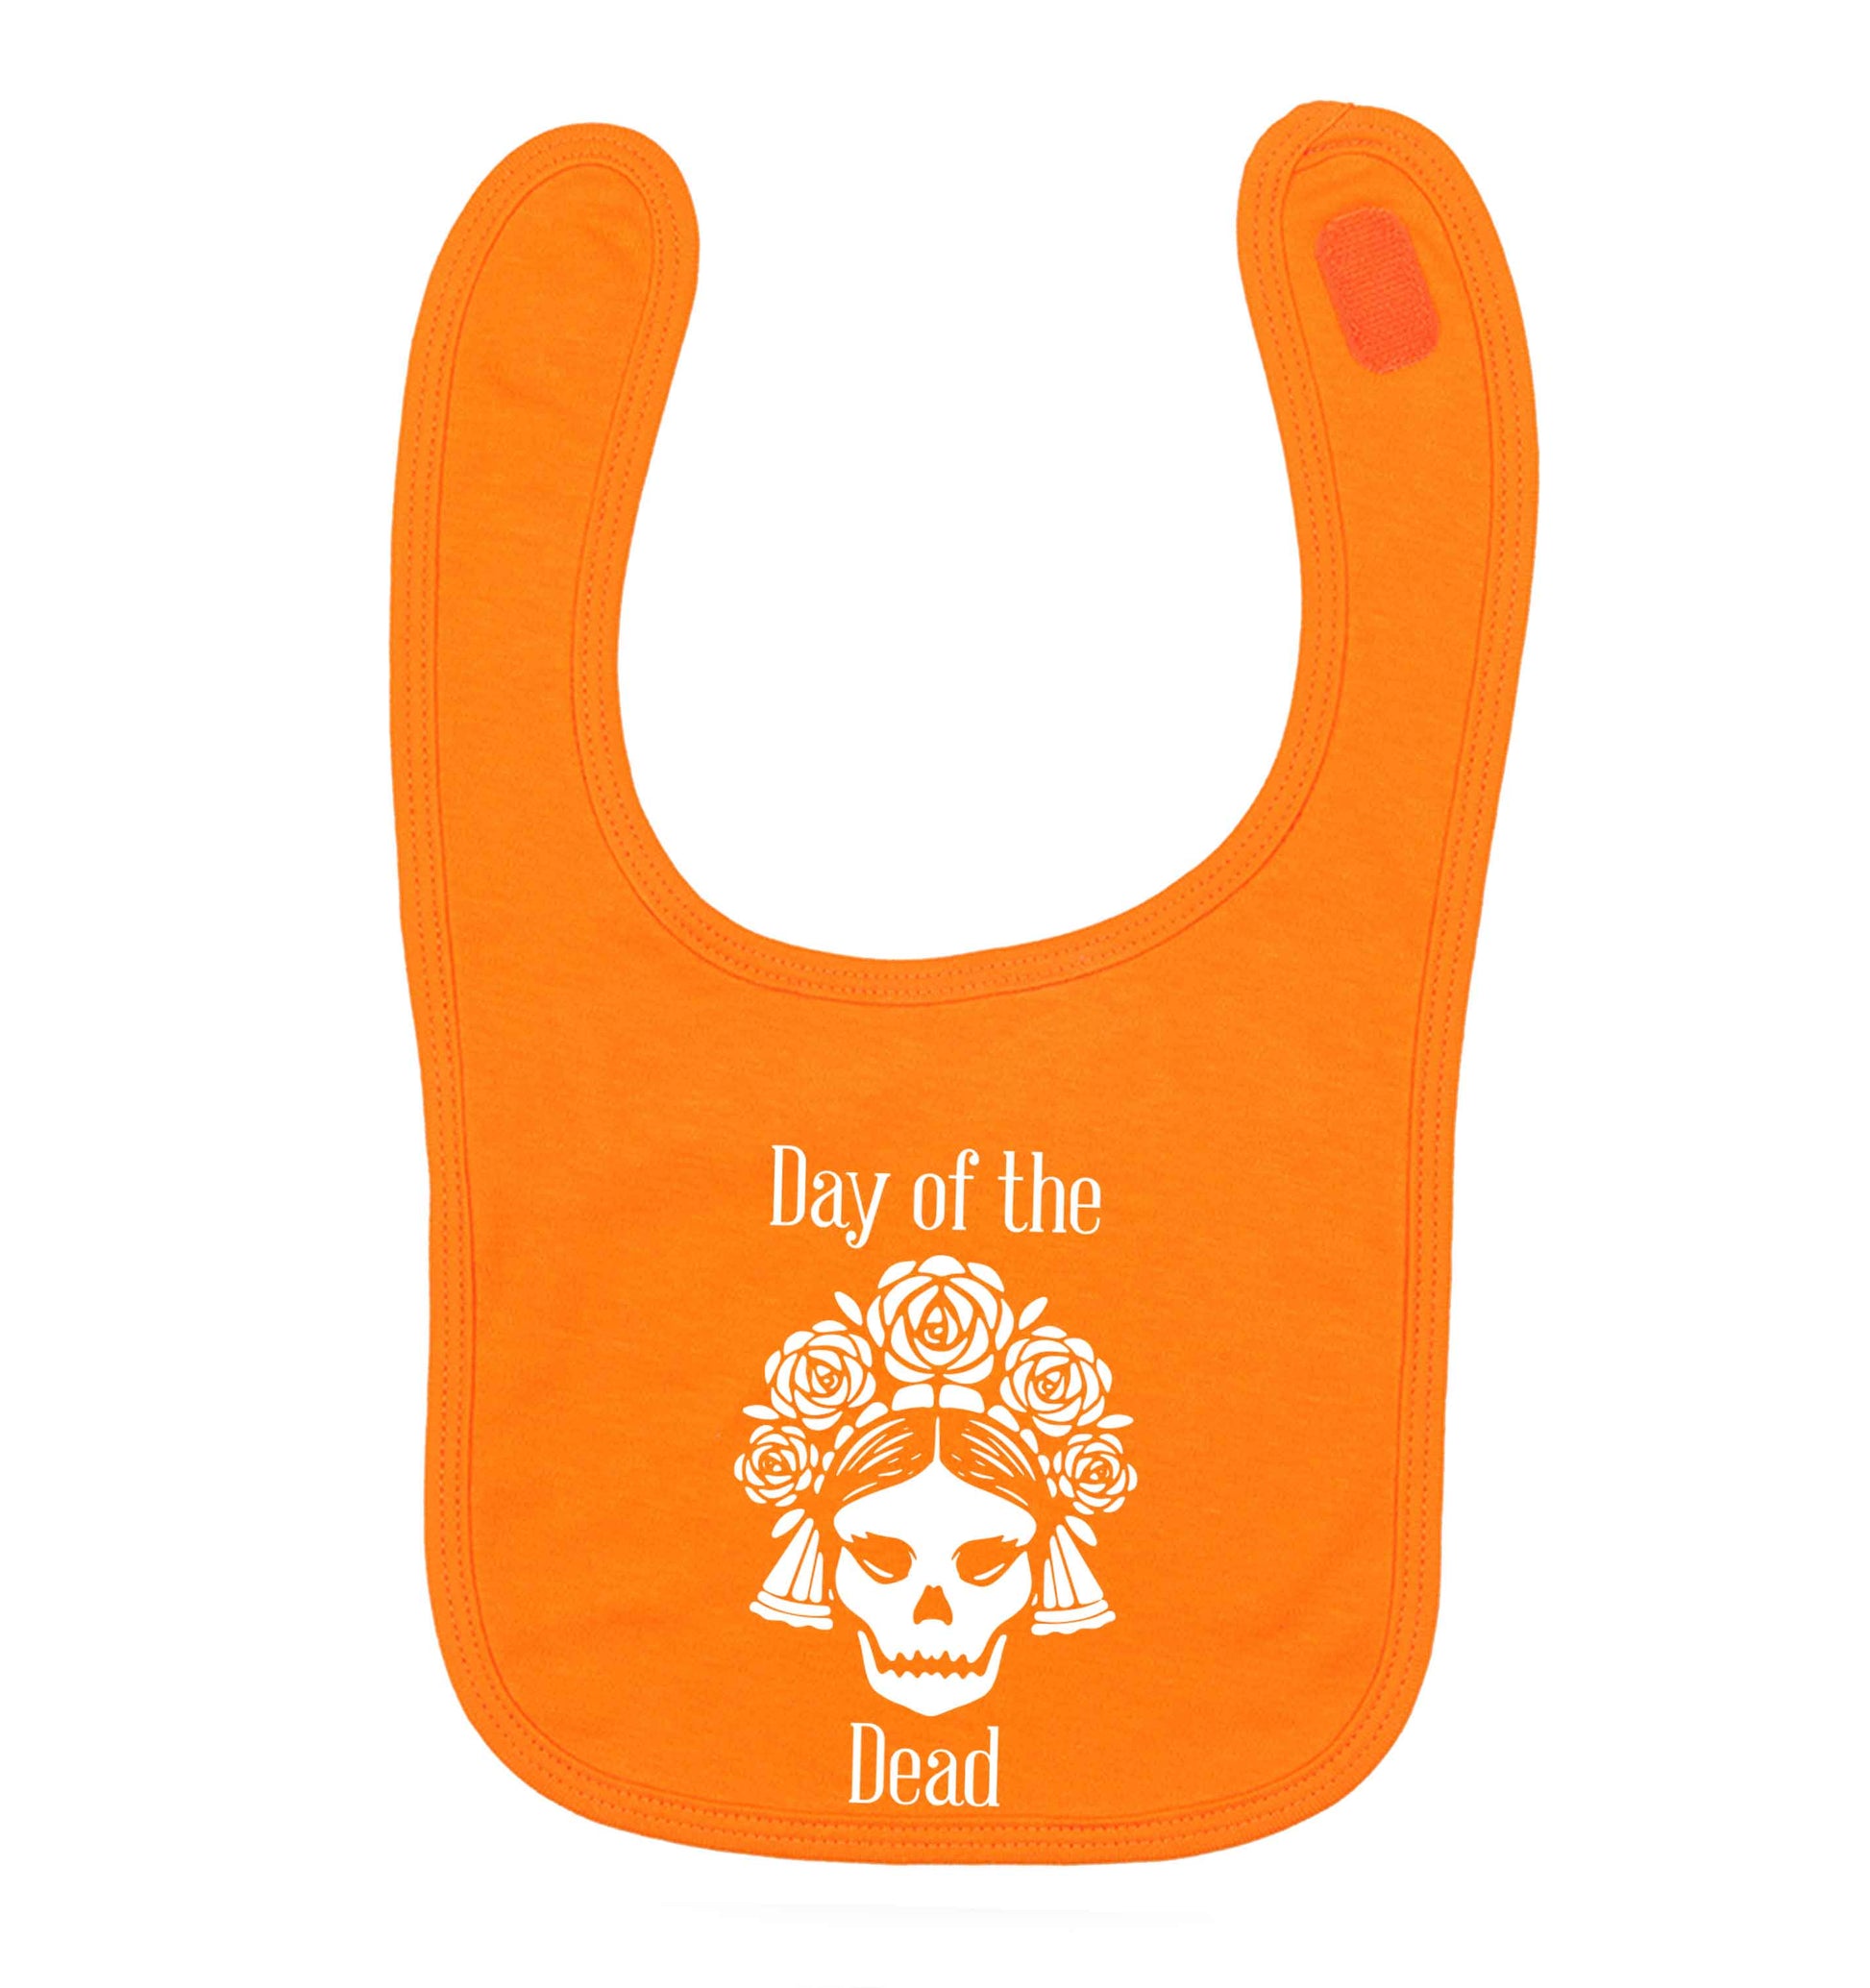 Day of the dead orange baby bib